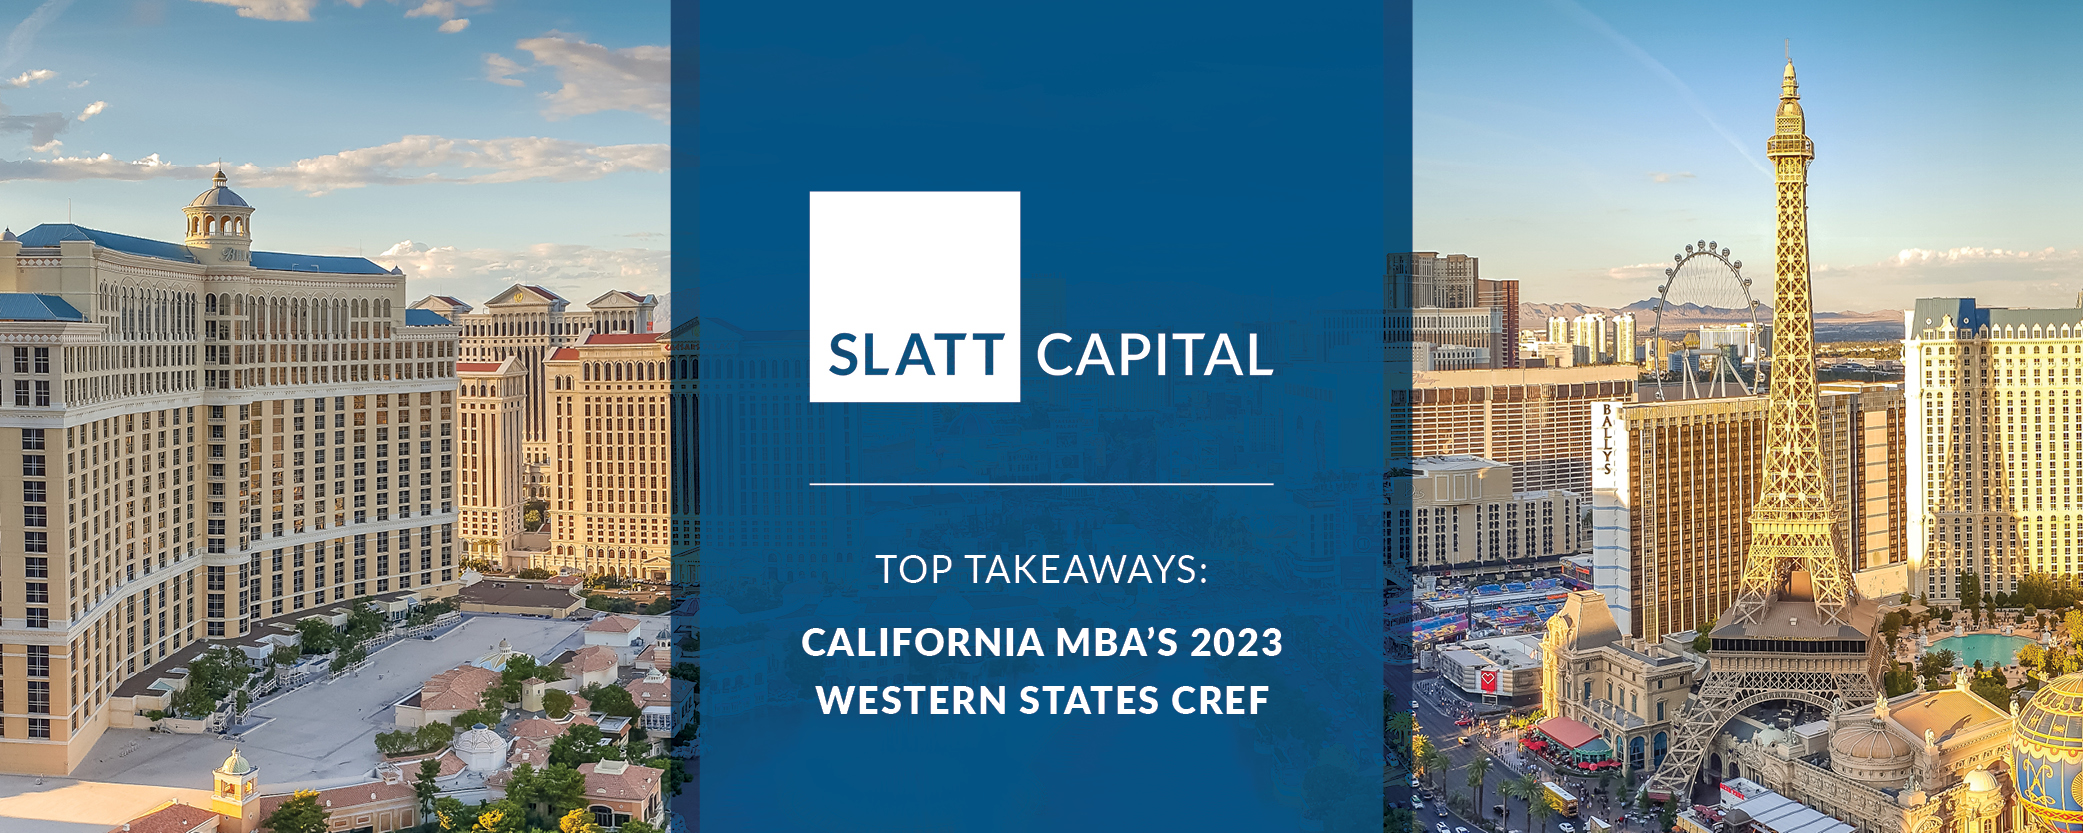 Top takeaways: california mba’s 2023 western states cref